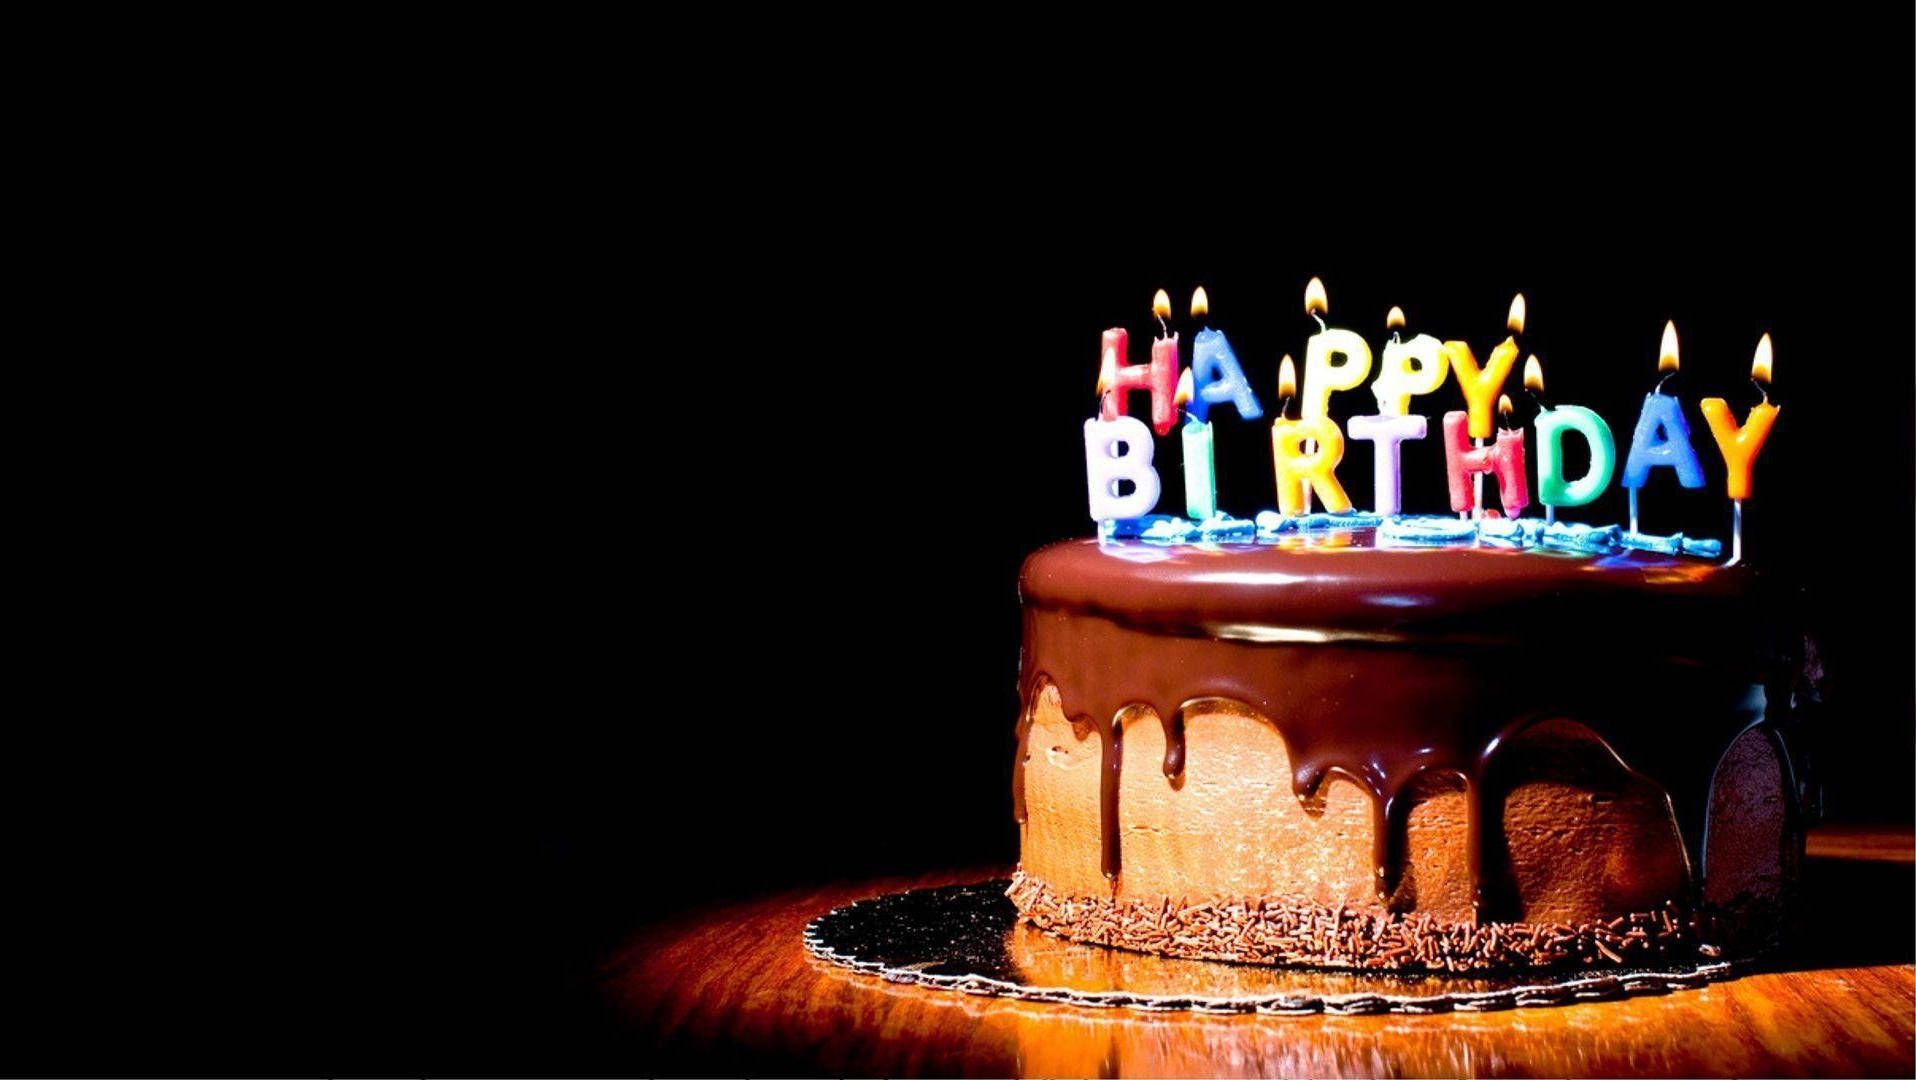 Download Aesthetic Happy Birthday Chocolate Cake Wallpaper